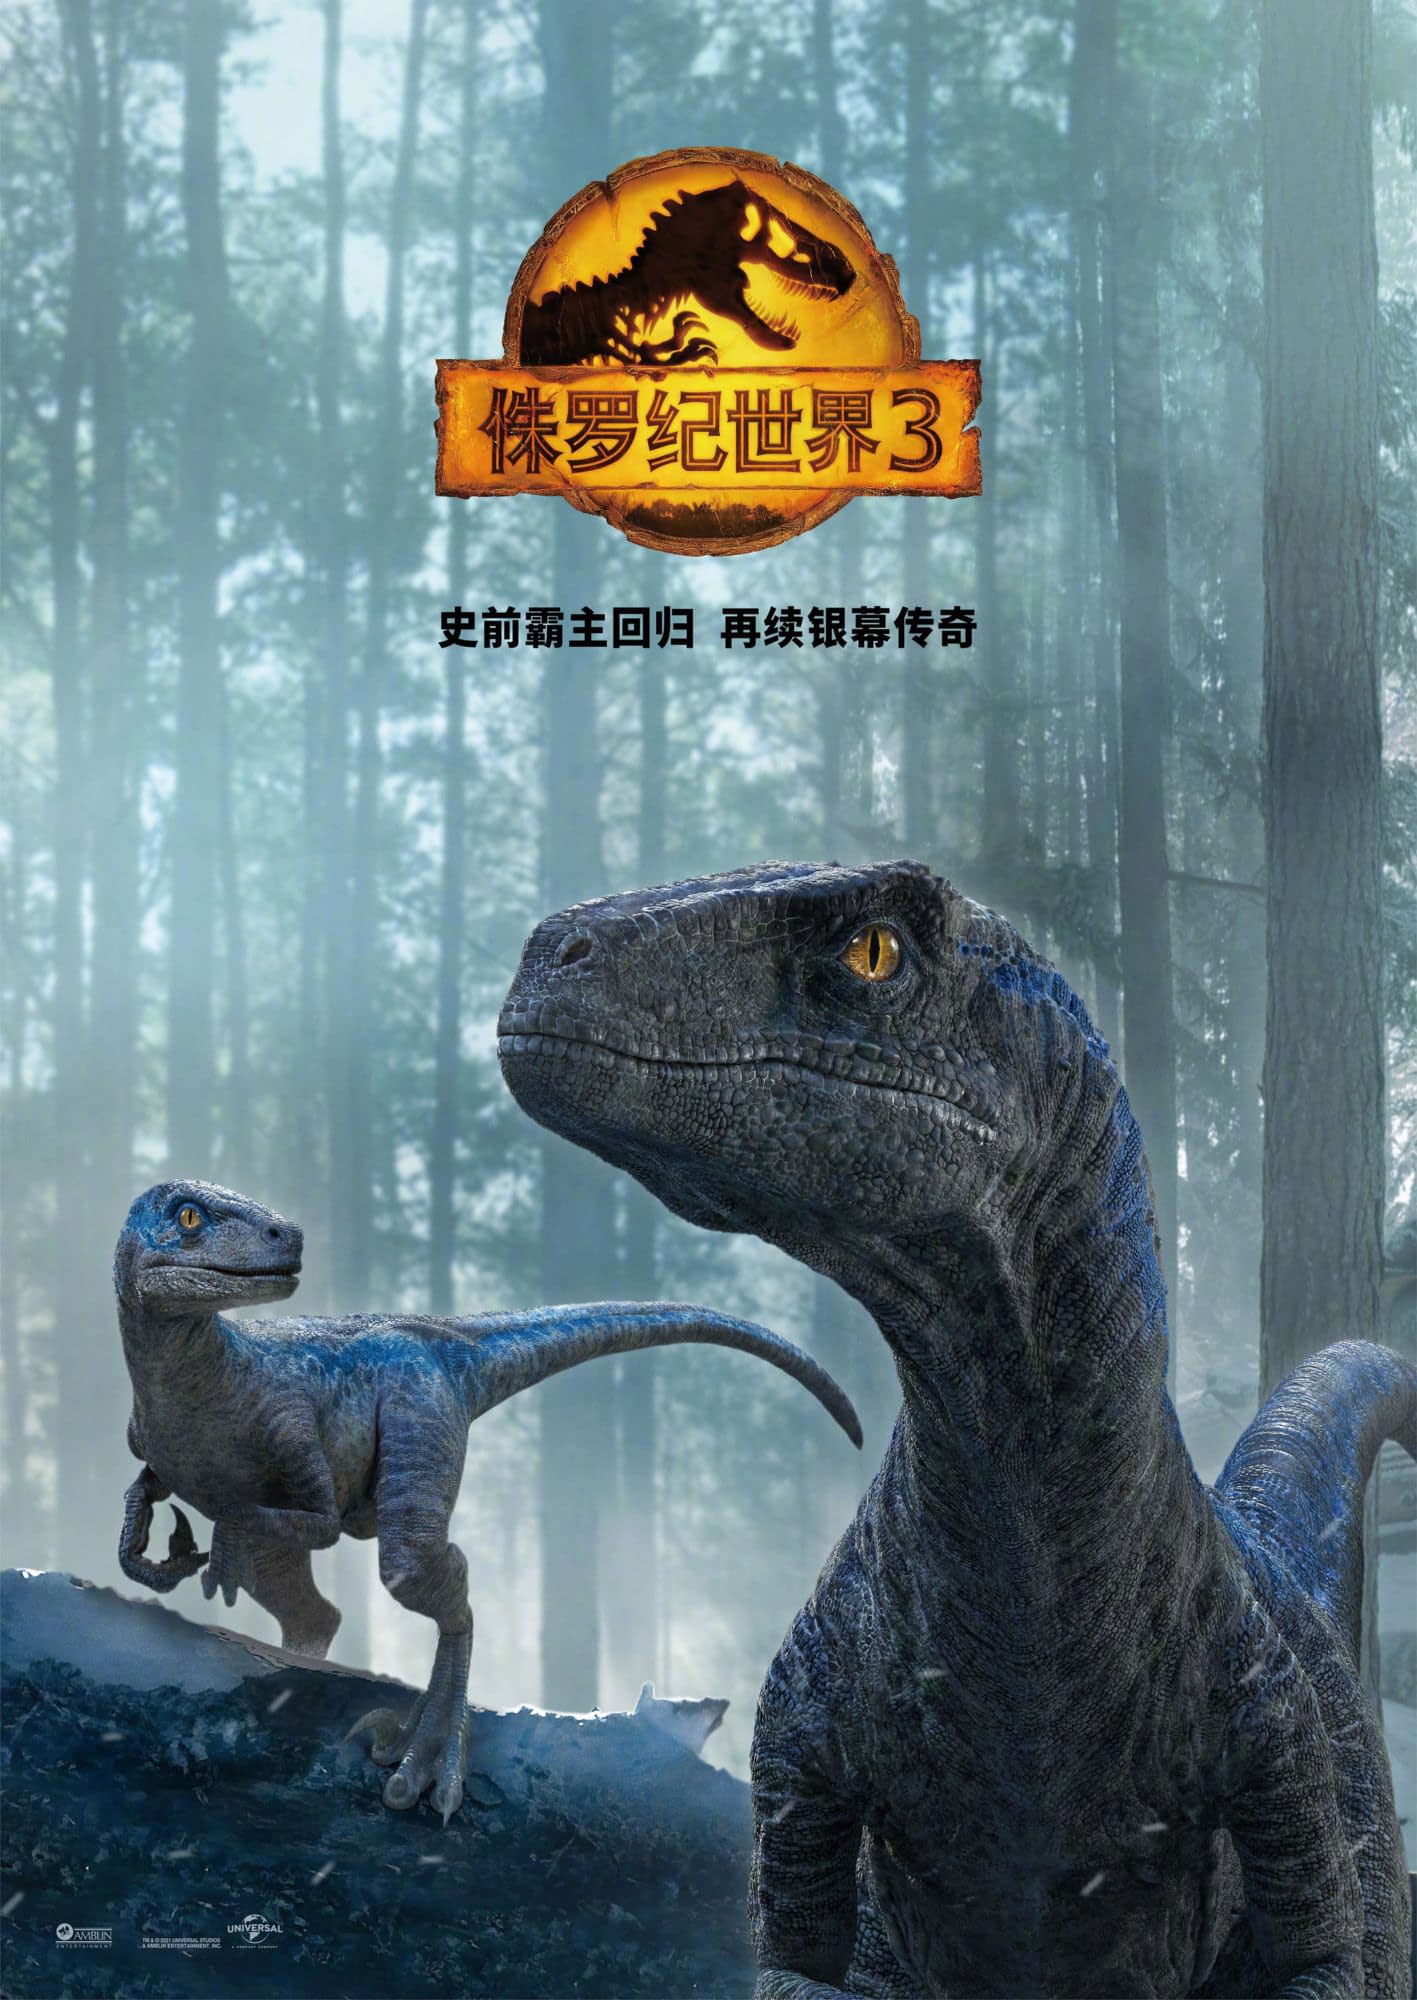 New International Poster for Jurassic World: Dominion